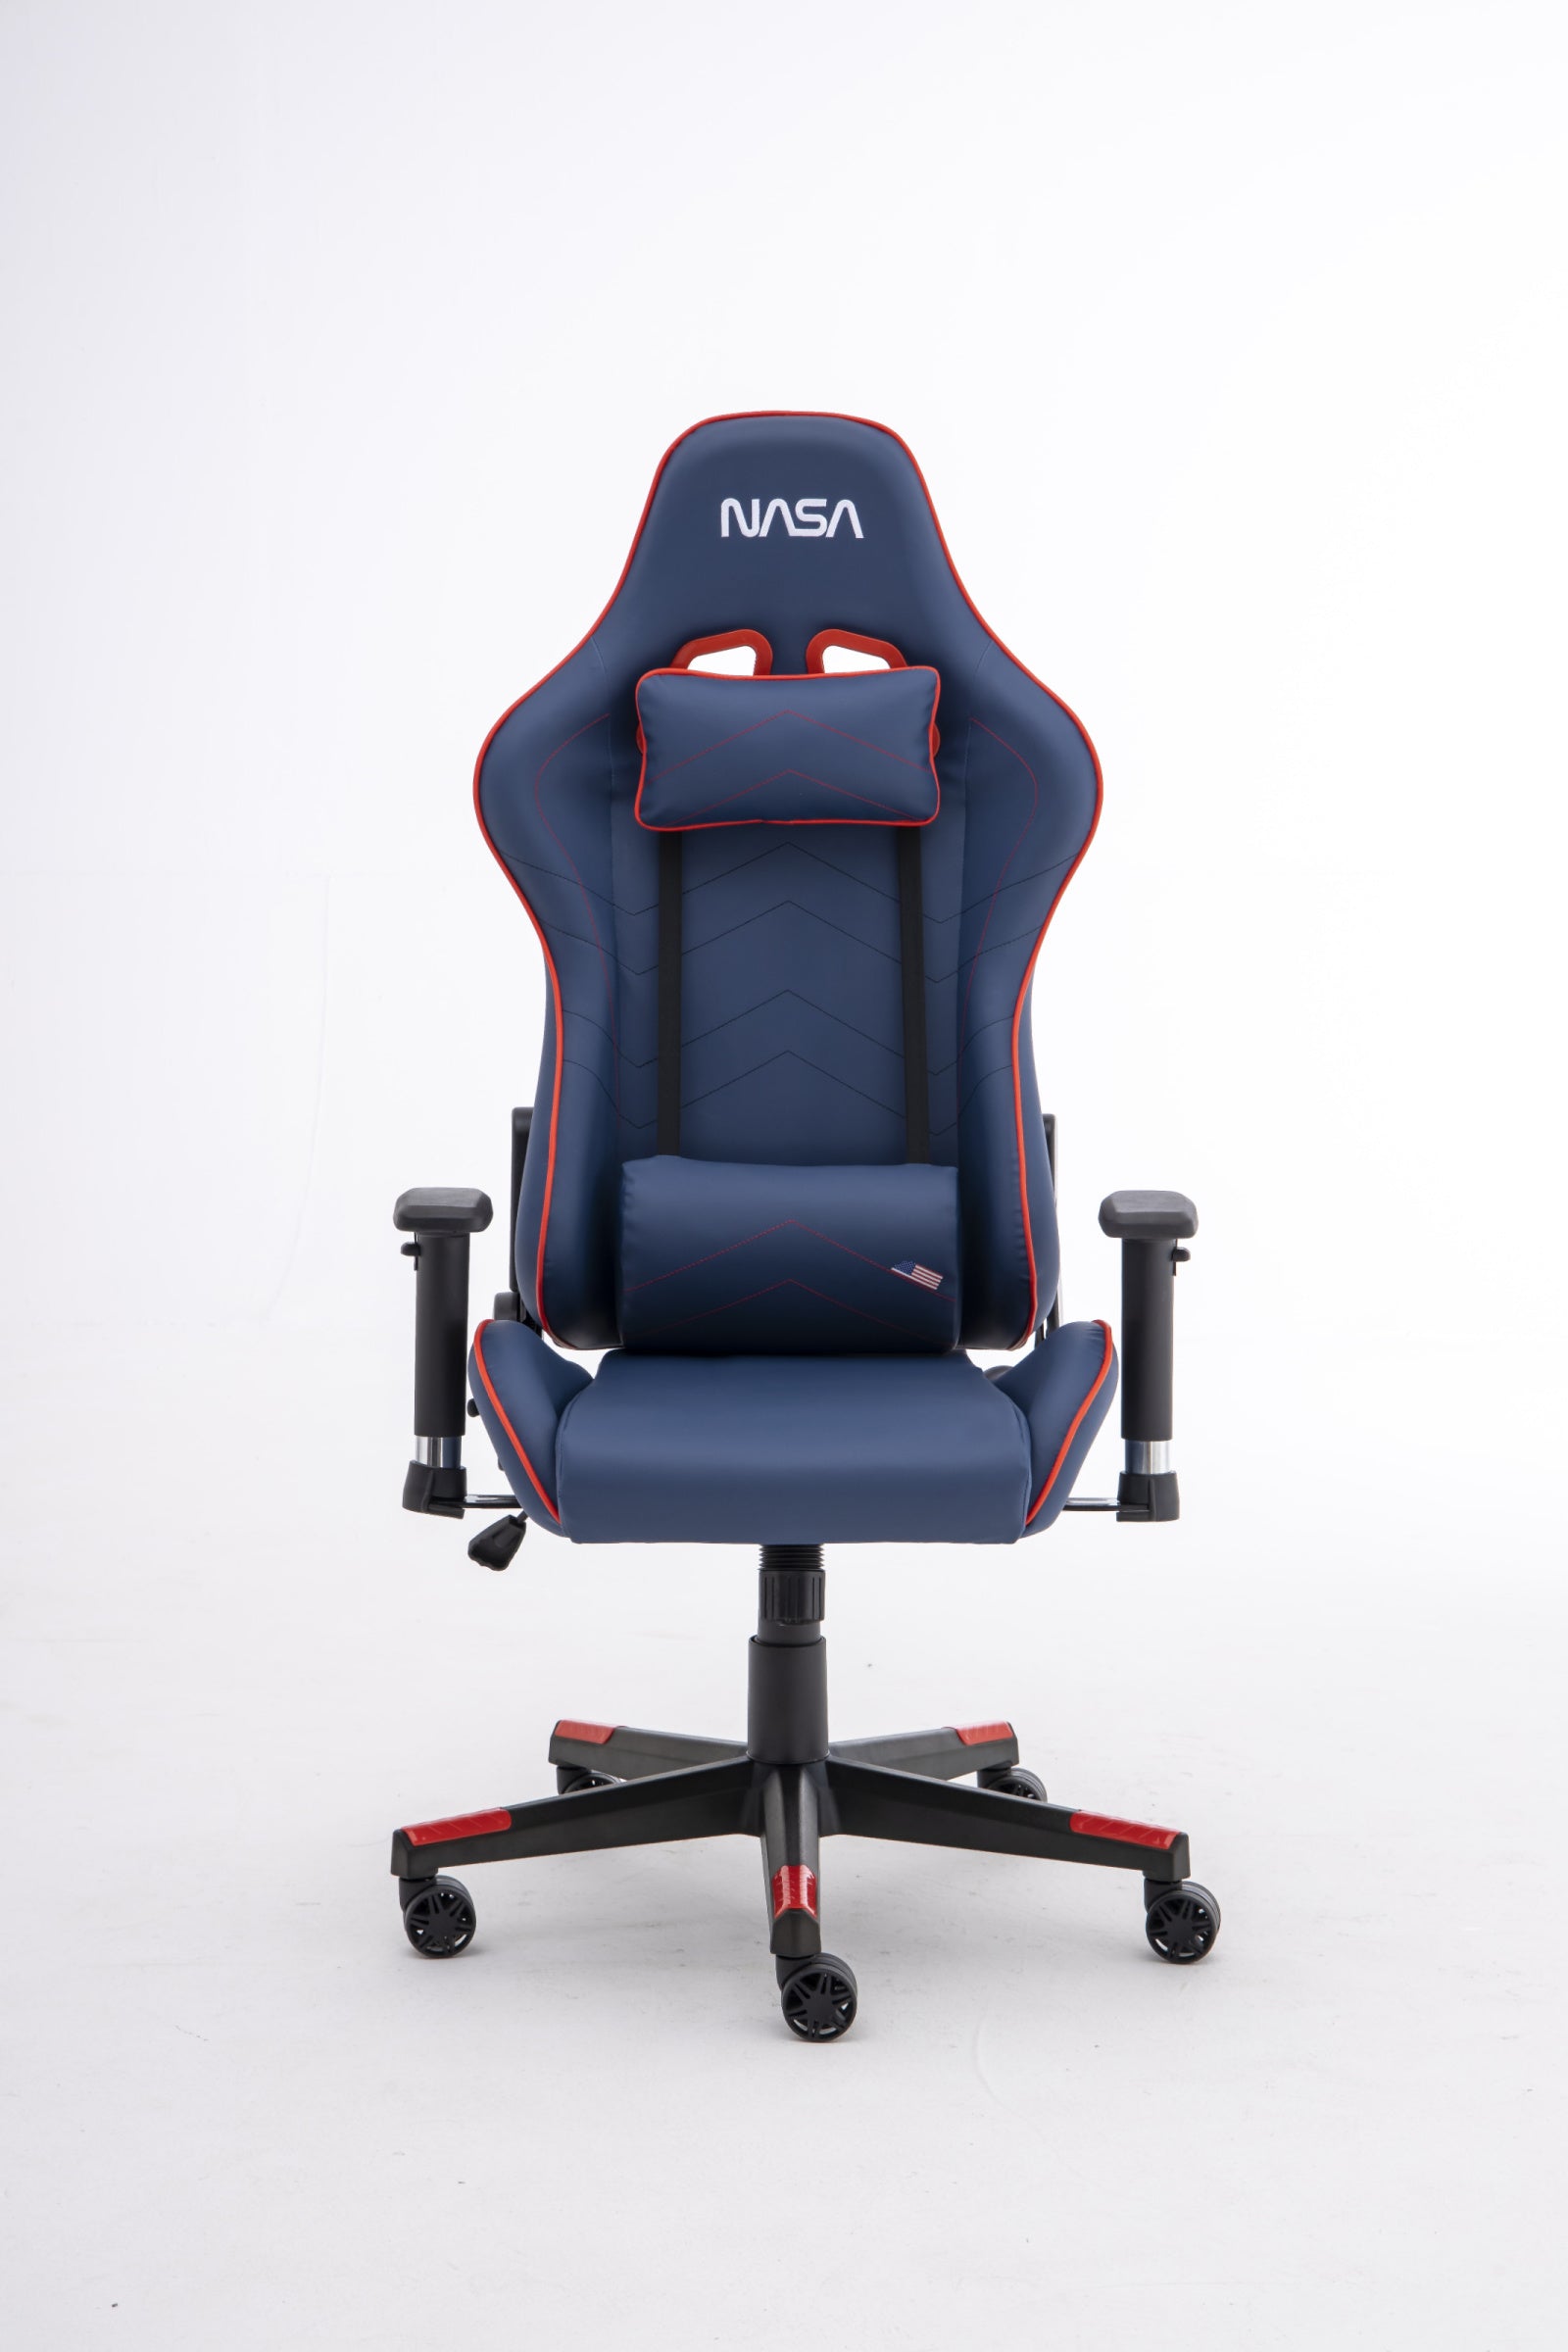 Nasa Galactic Gaming Chair - Blue and Red